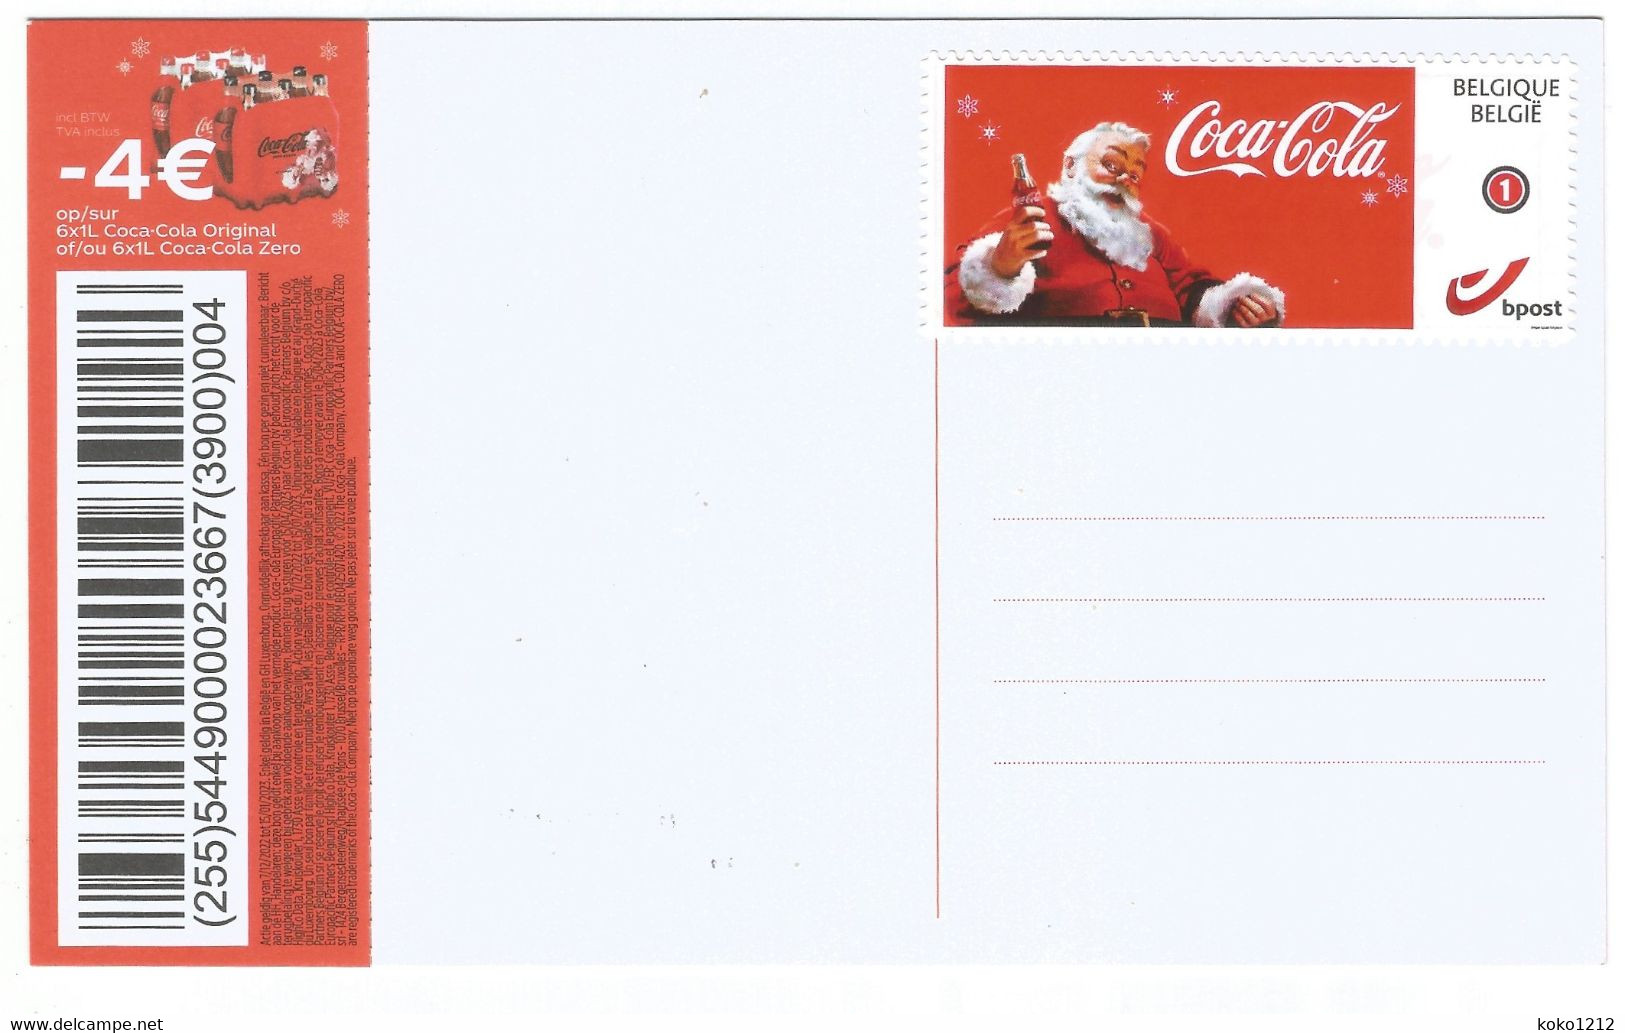 RARE CocaCola Belgium Postcard (1/2) With Private Stamp CocaCola NEUF - Cartoline